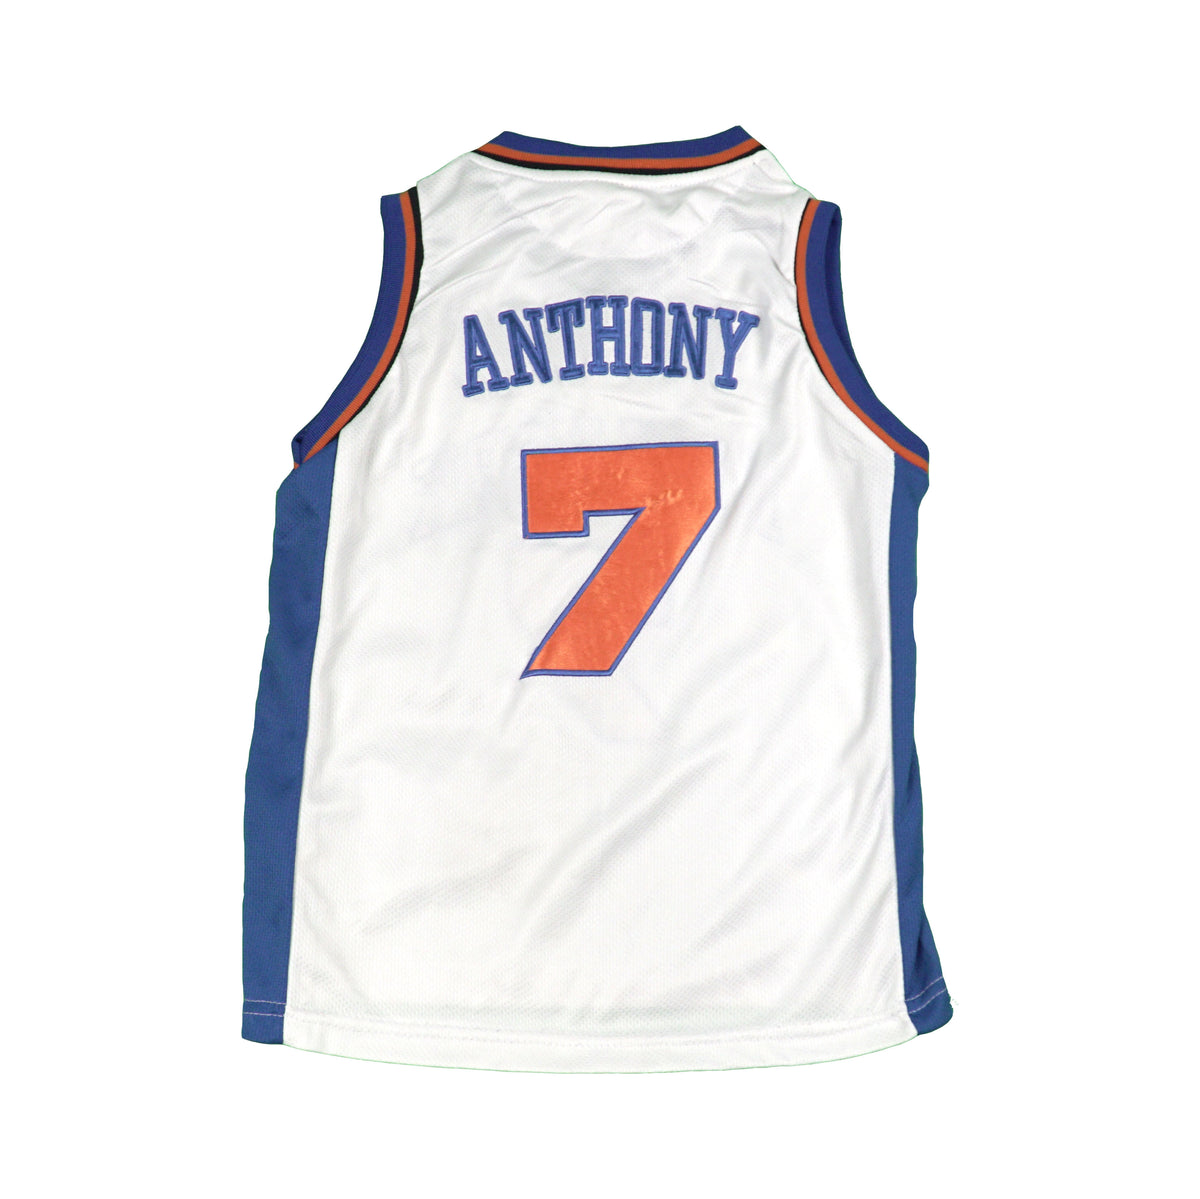 New York Knicks Carmelo Anthony regular season Retro Vintage Jersey